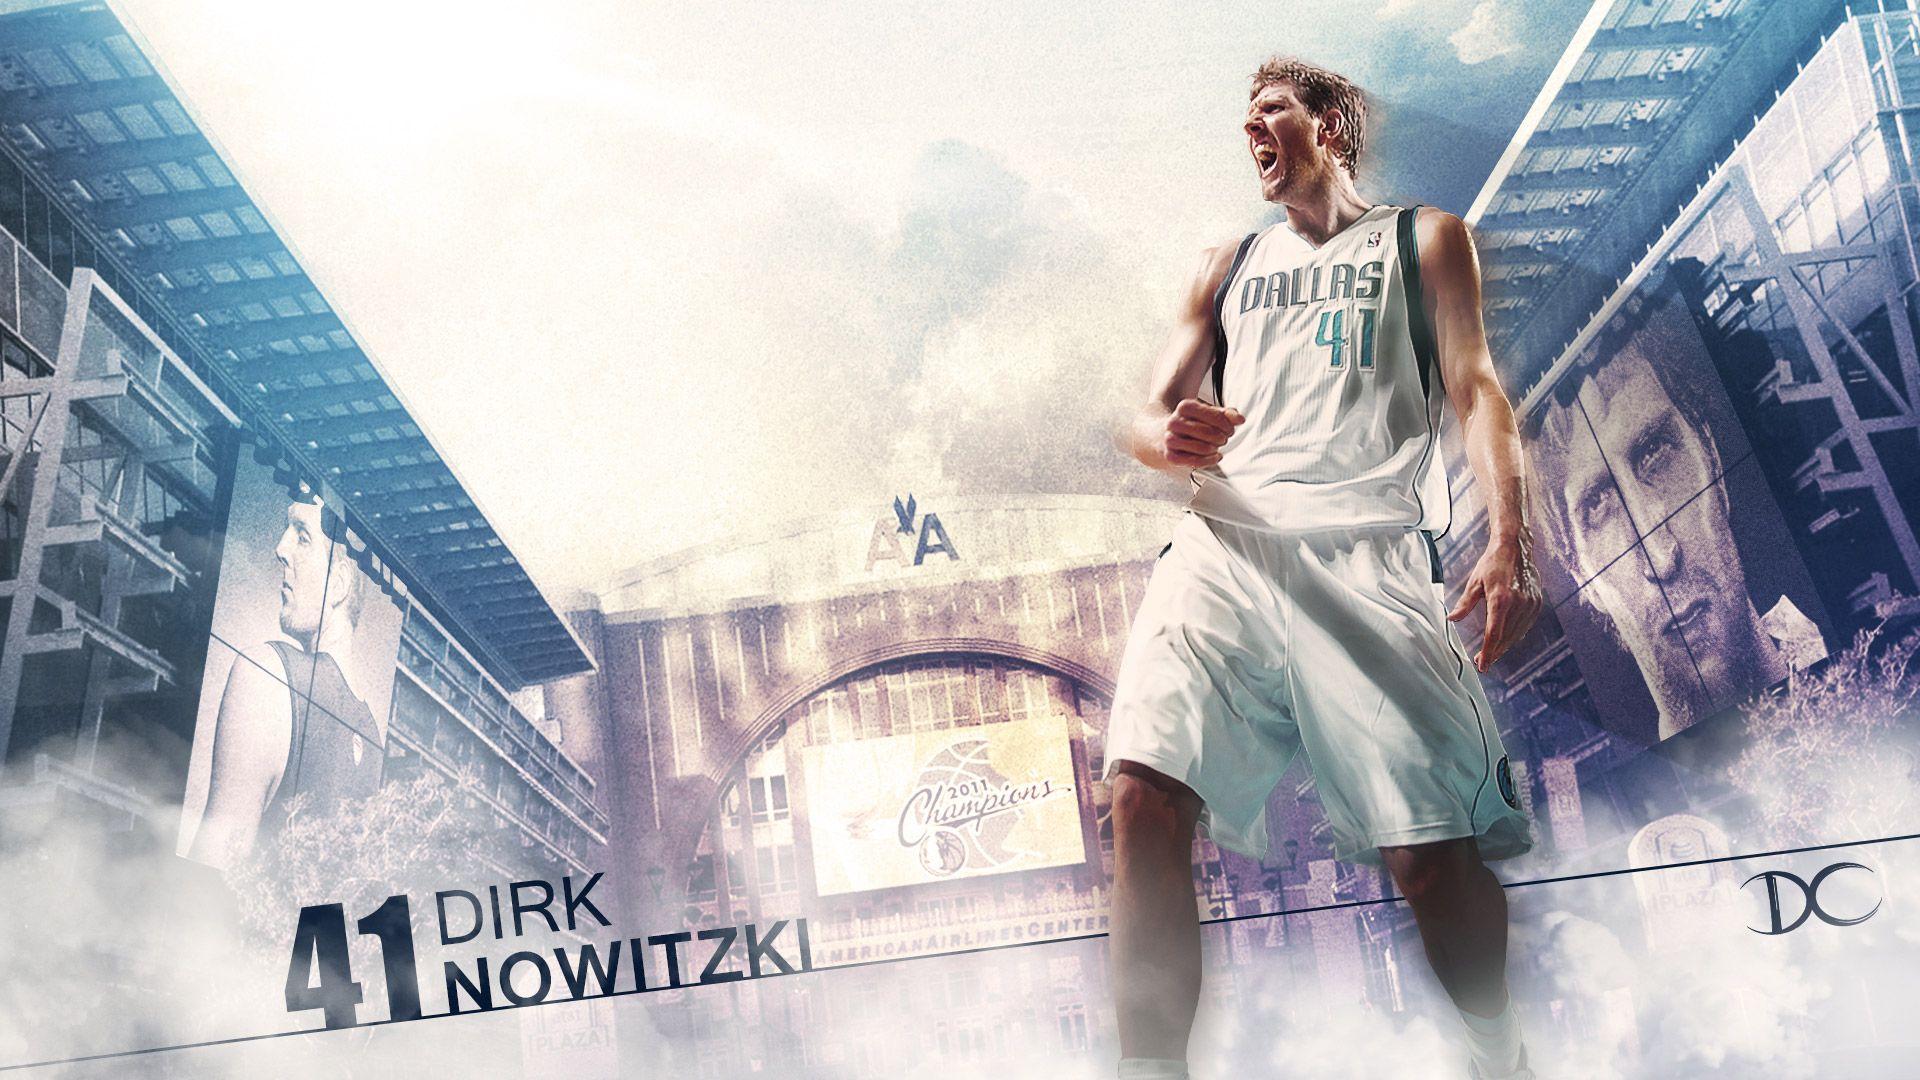 Dirk Nowitzki Wallpaper. Basketball Wallpaper at